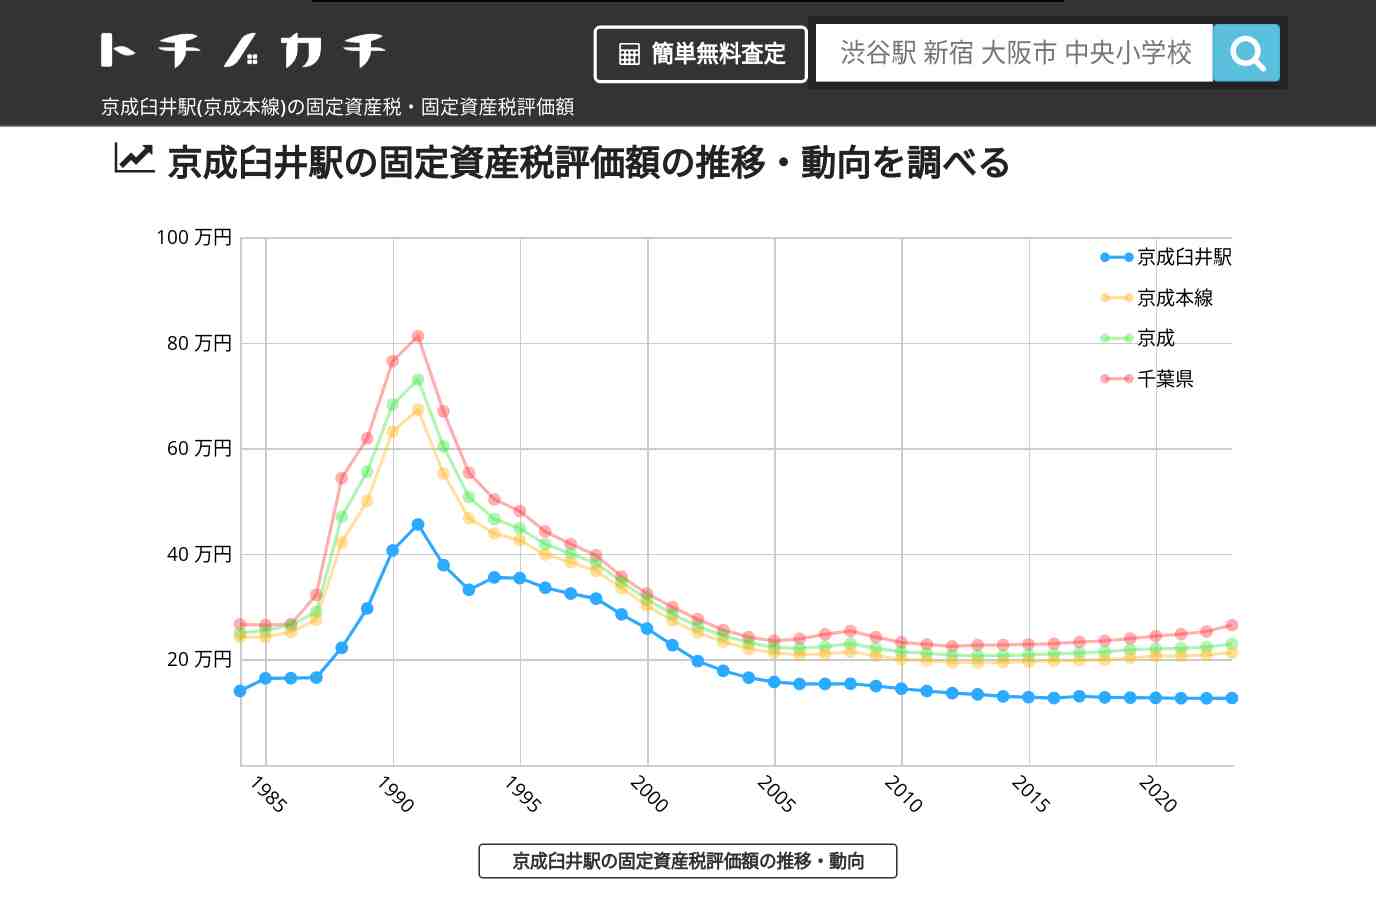 京成臼井駅(京成本線)の固定資産税・固定資産税評価額 | トチノカチ